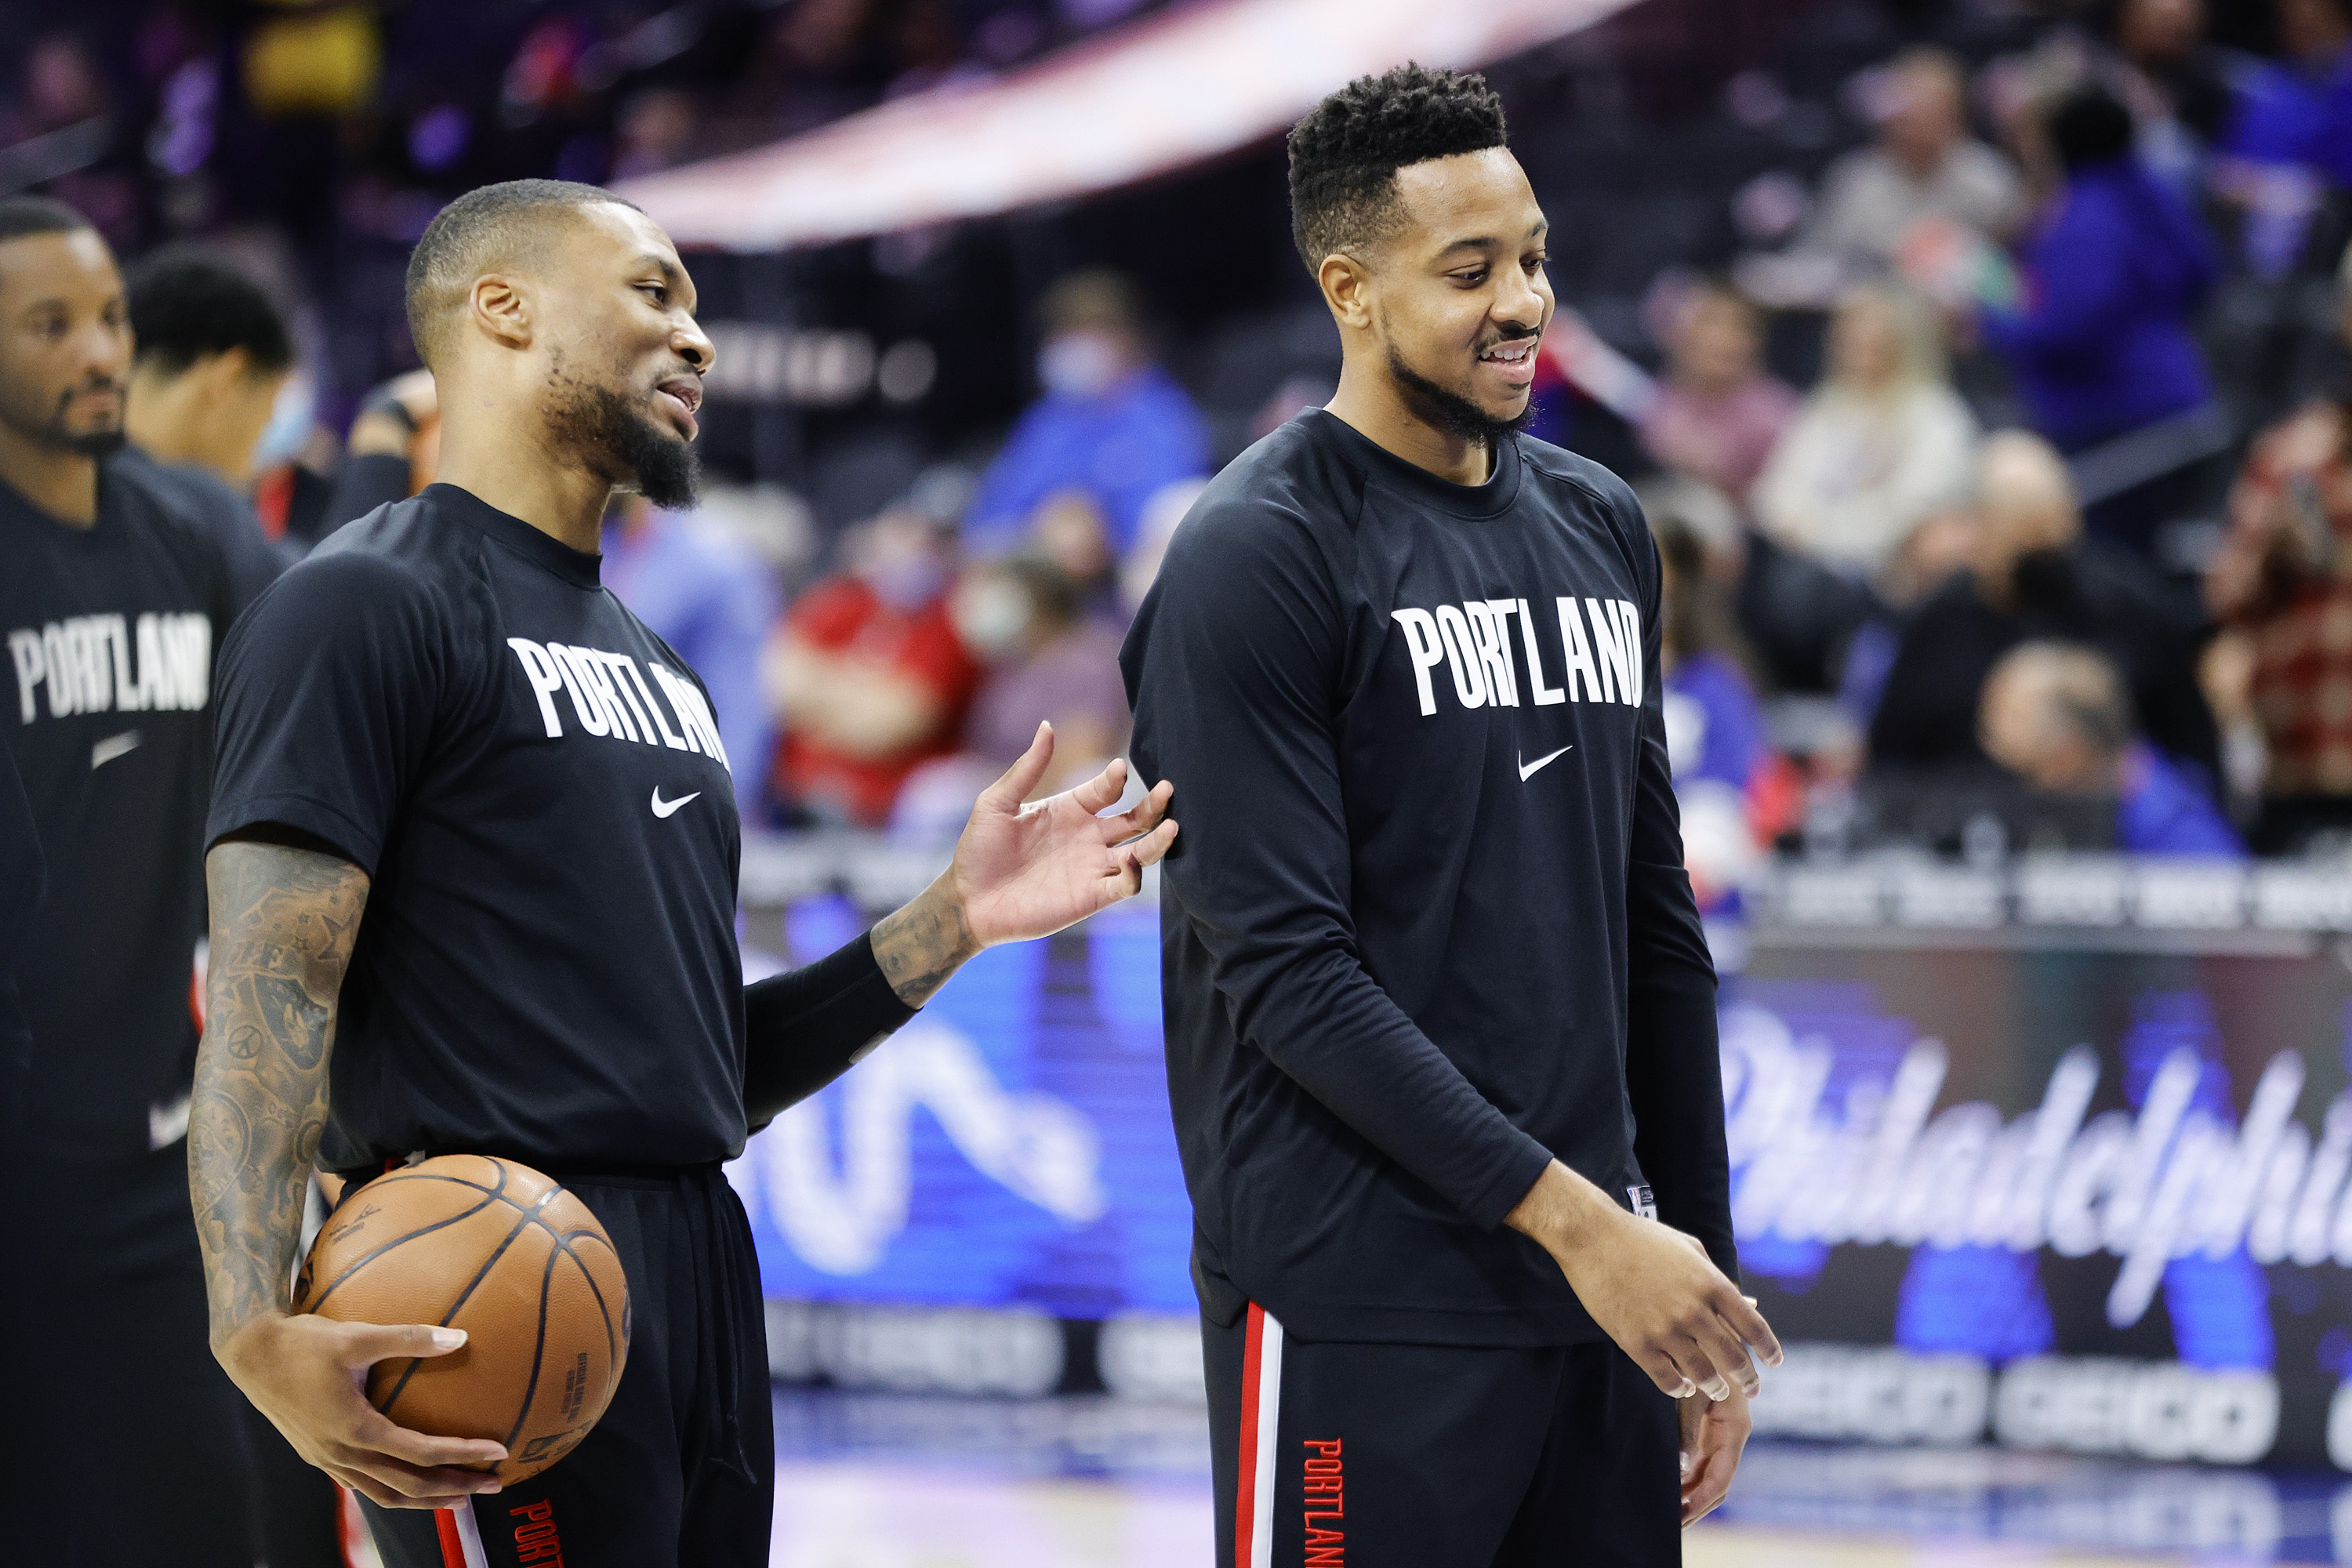 Portland Trail Blazers guards Damian Lillard and CJ McCollum share a laugh before a November game against the Philadelphia 76ers